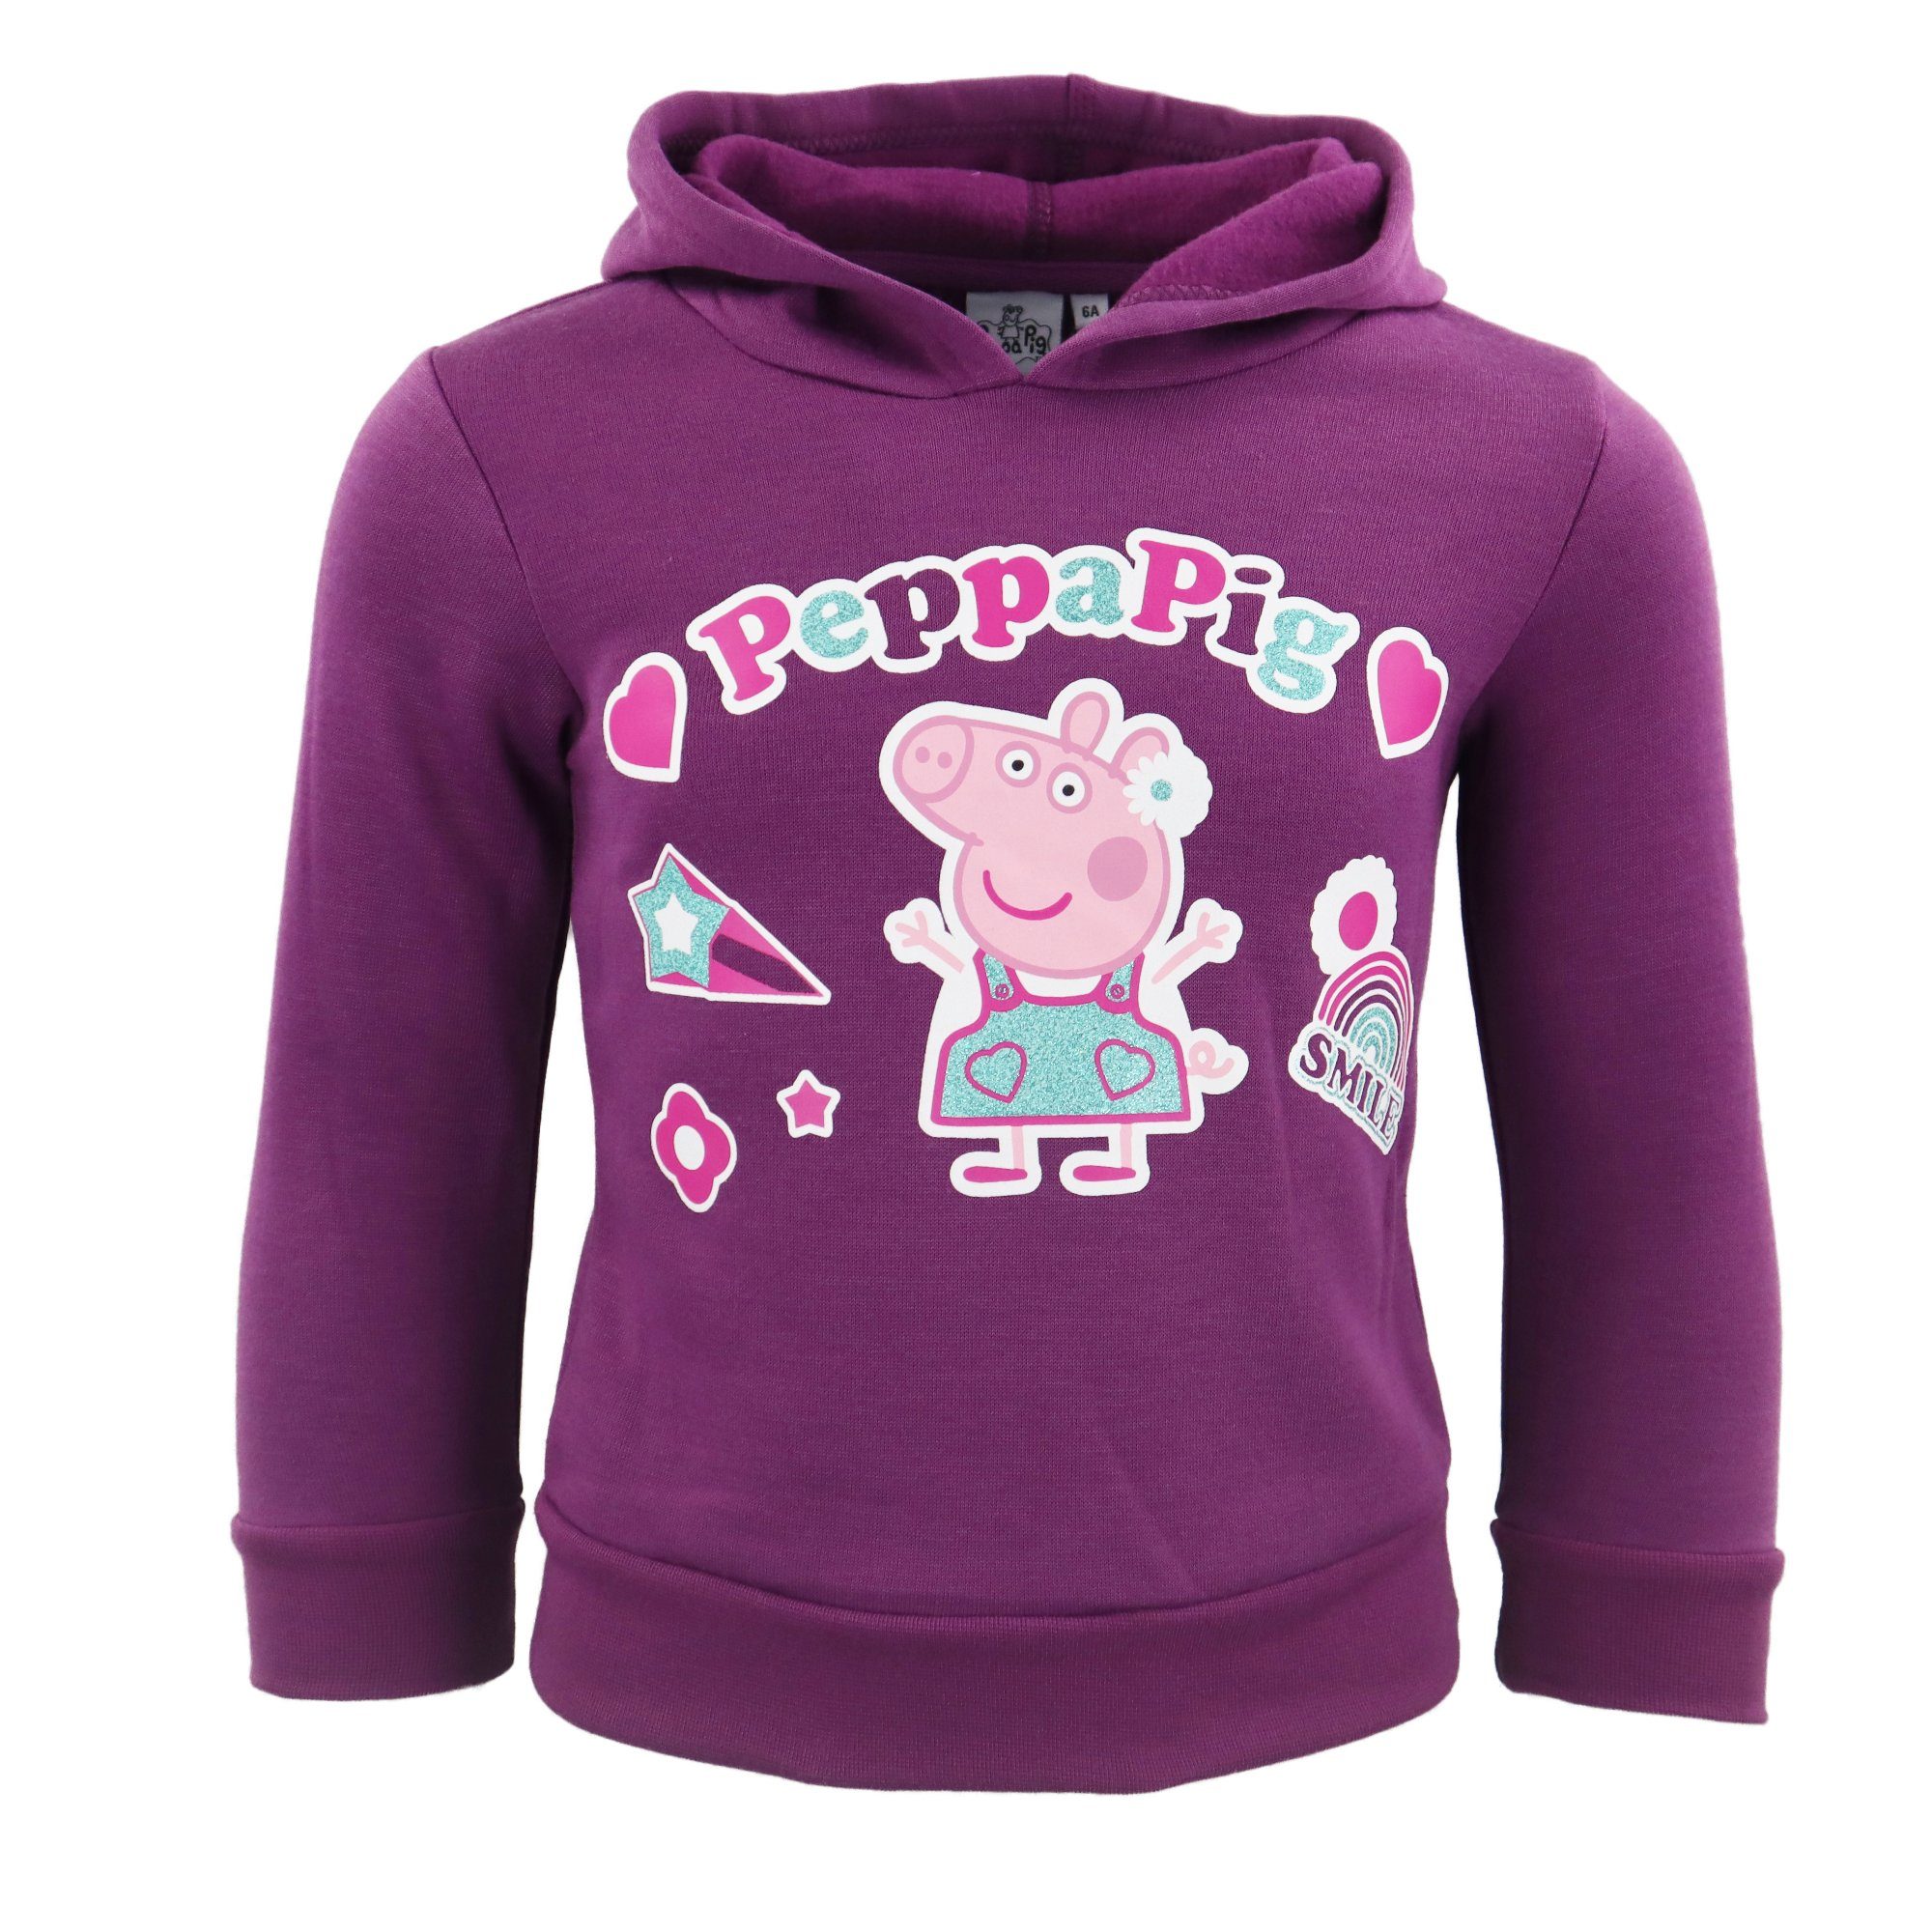 Peppa Pig Kapuzenpullover Peppa Pig Wutz Kinder Kapuzenpullover Pulli Gr. 98 bis 116 Mädchen in Rosa Lila | Hoodies